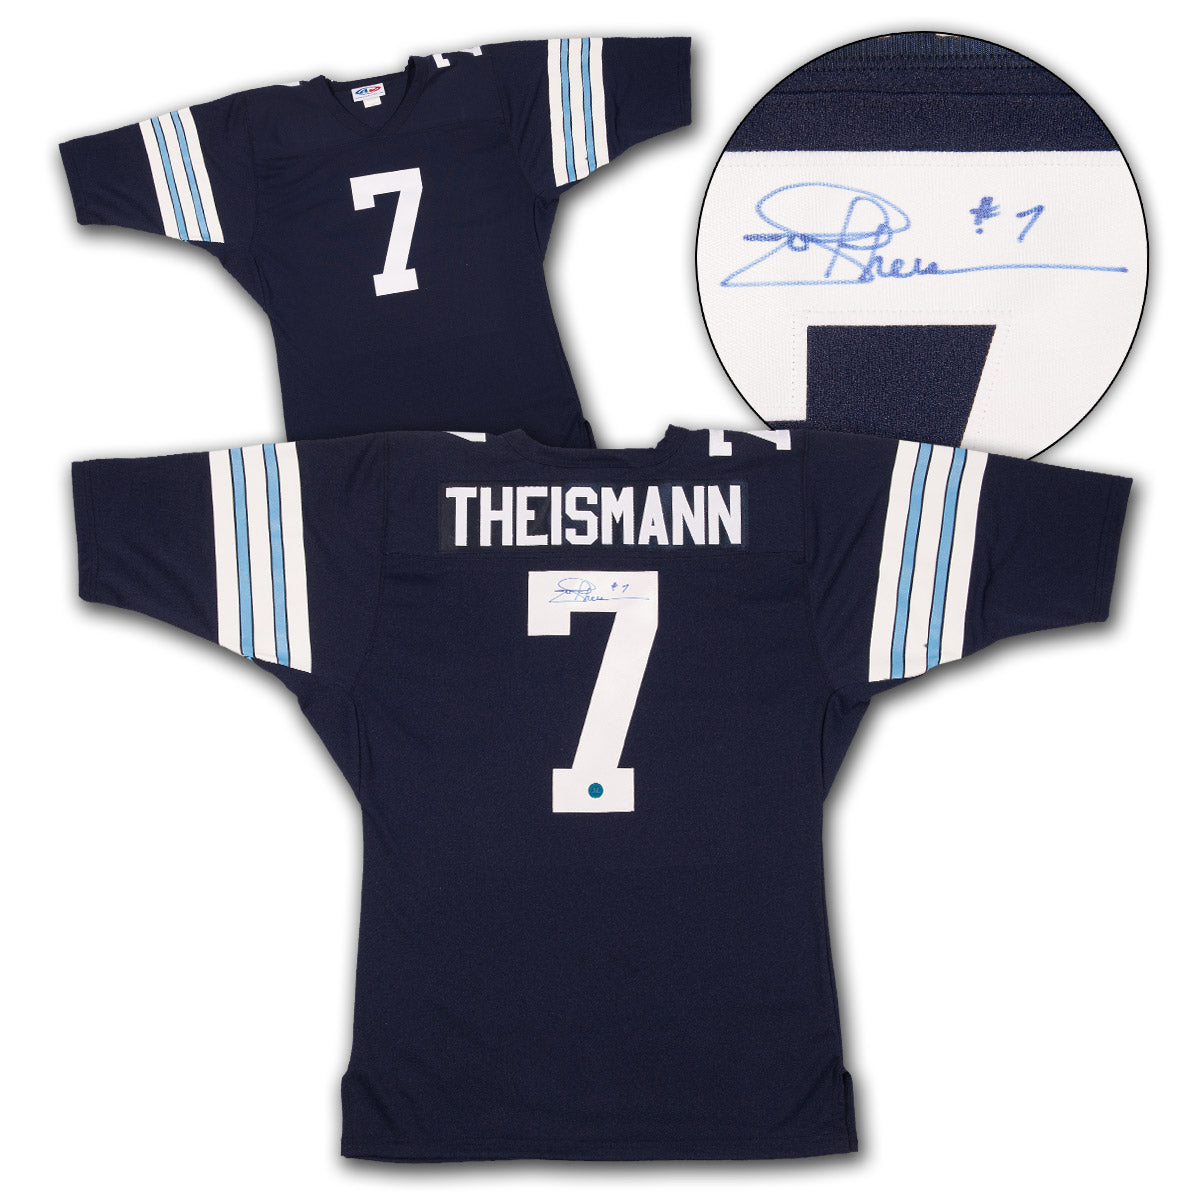 Joe Theismann Autographed Toronto Argos Football Jersey